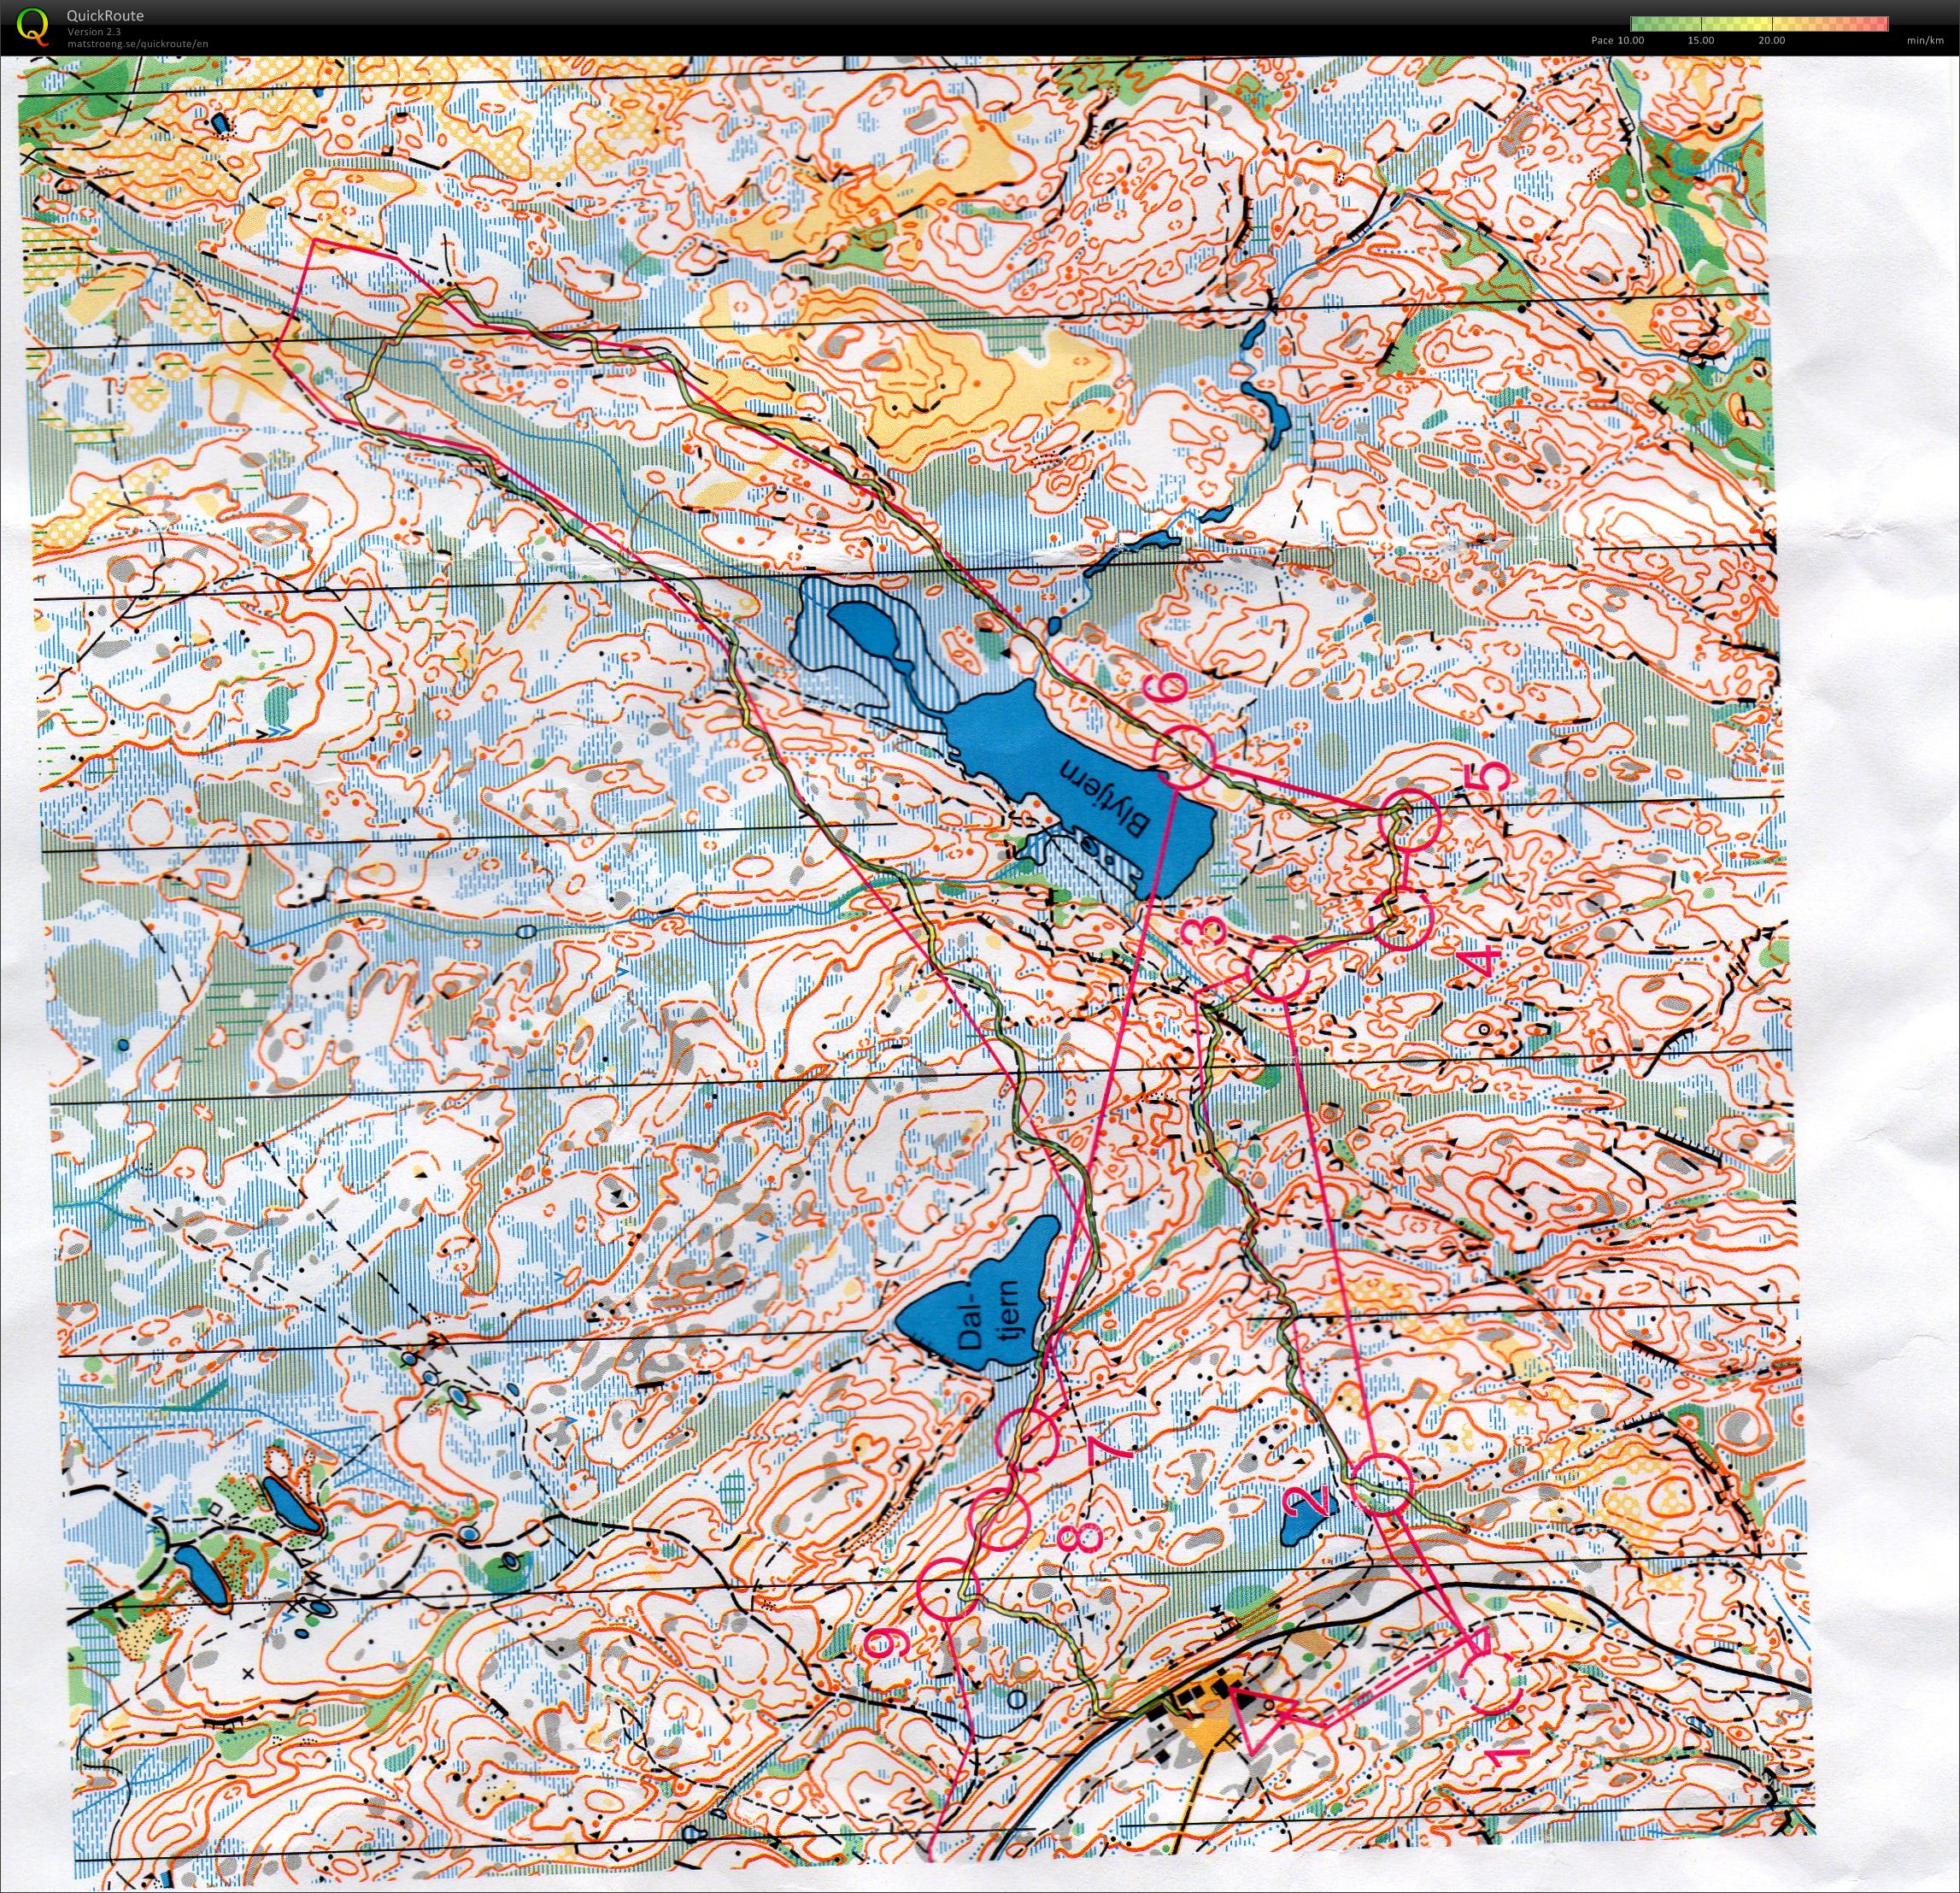 Løpetur på kart i høiåsmarka (04-11-2011)